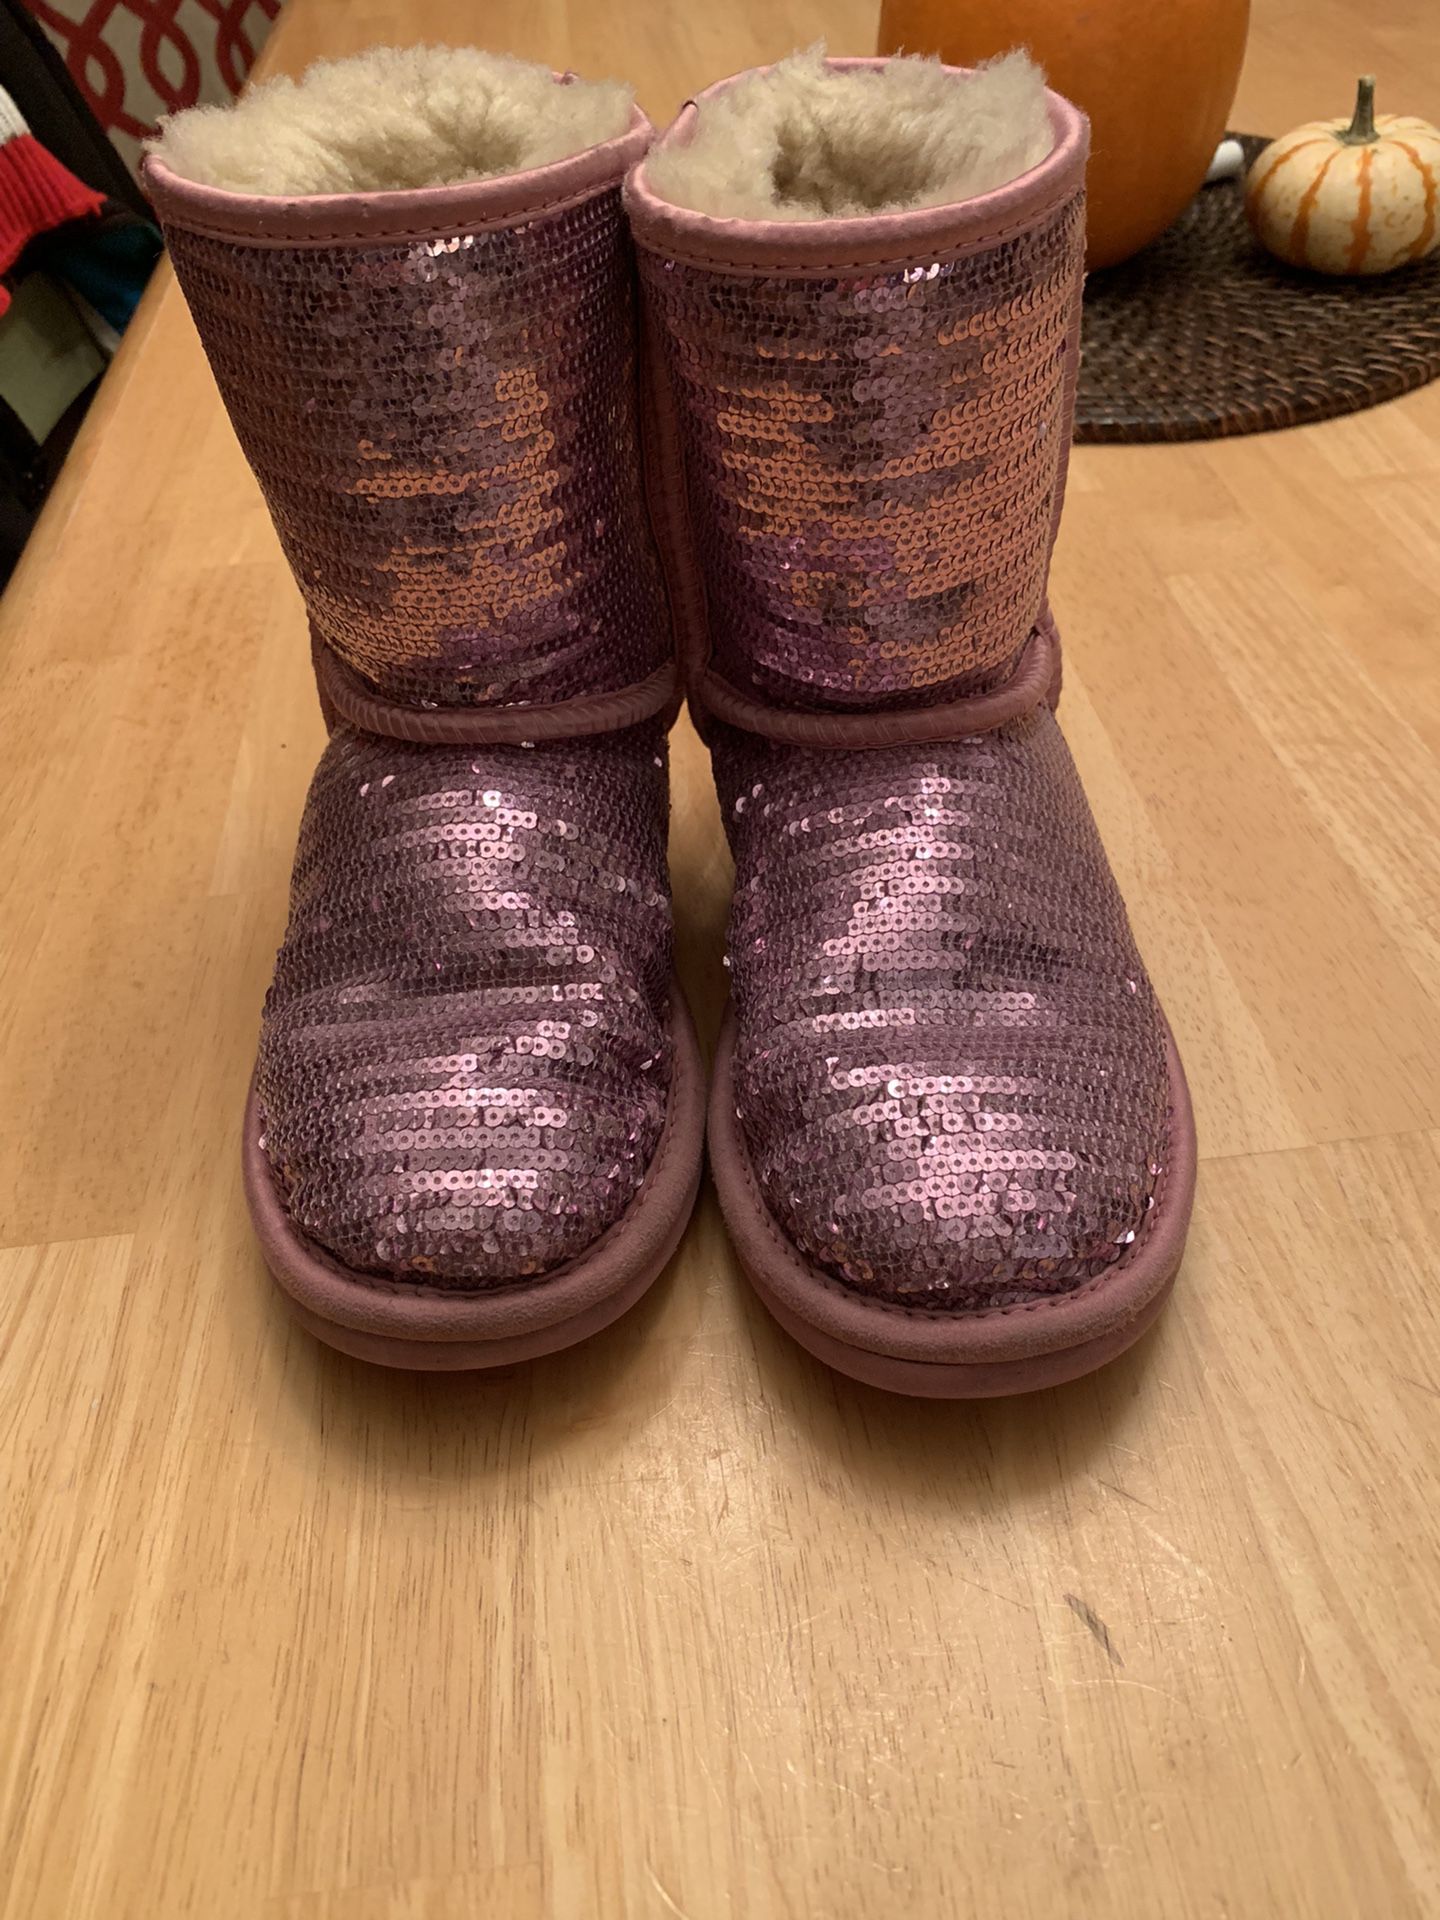 Ugh sequin pink boots